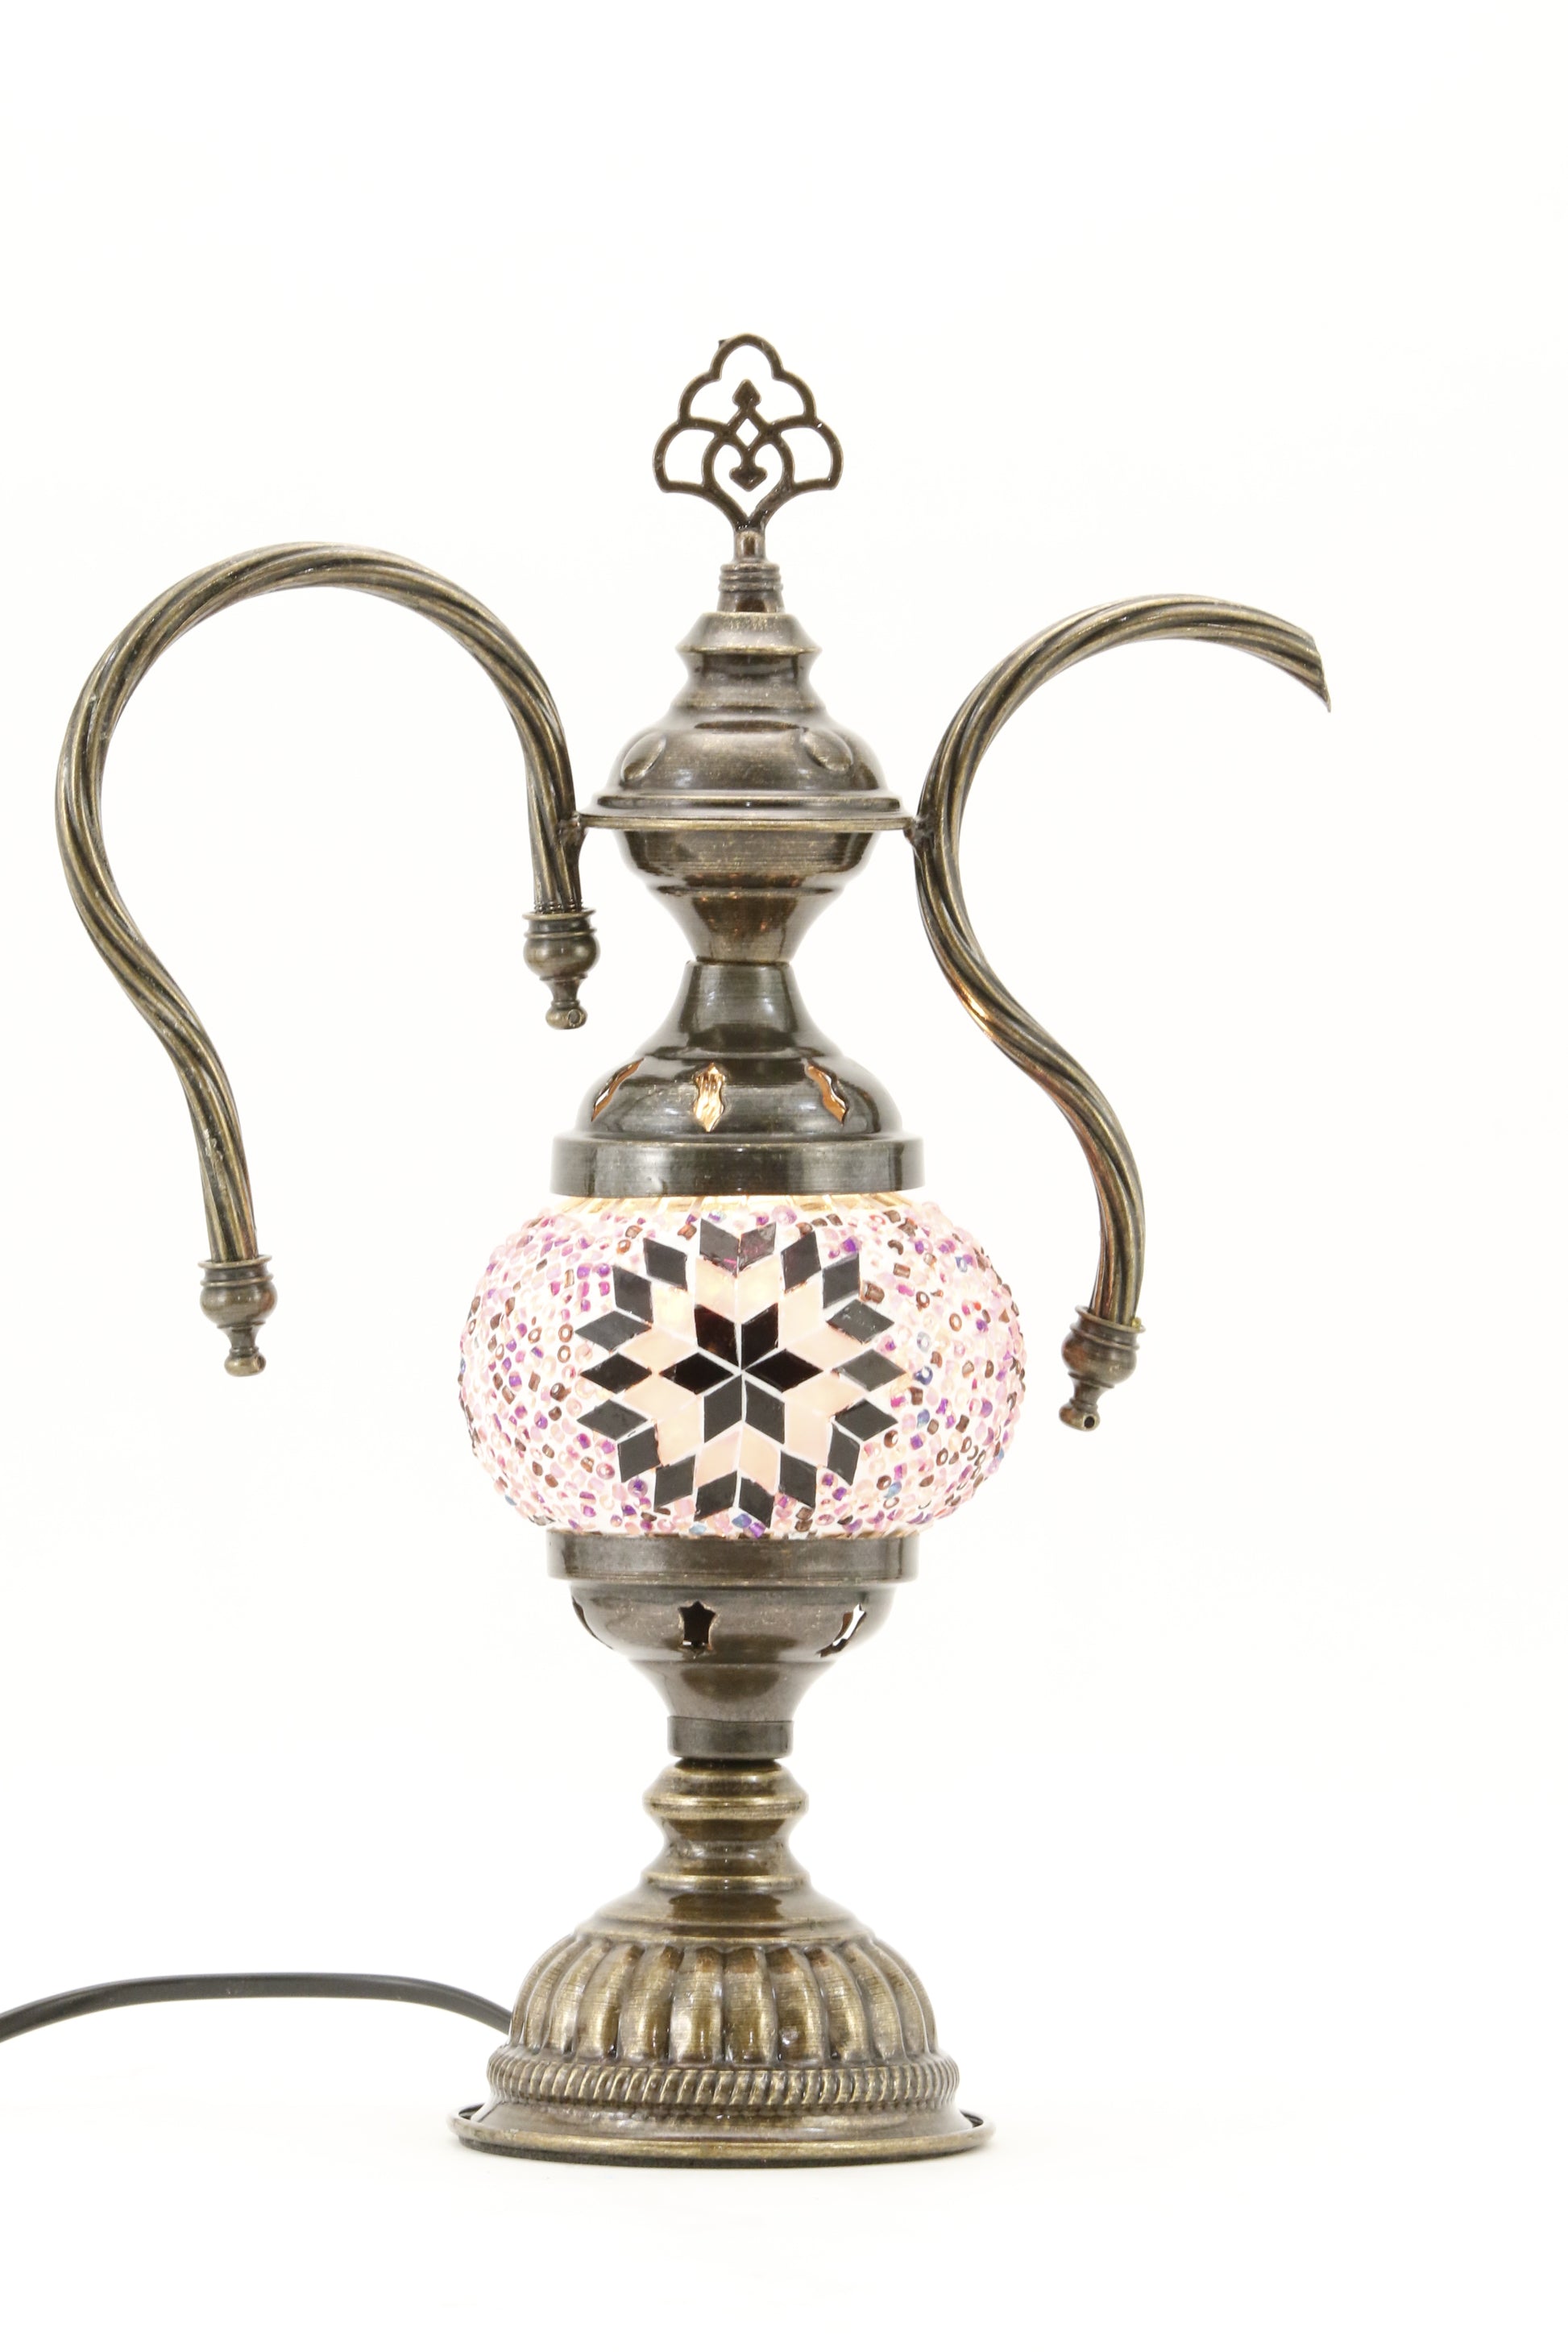 TURKISH MOSAIC GENIE BOTTLE TABLE LAMP MAUVISH PINK -TURNED ON